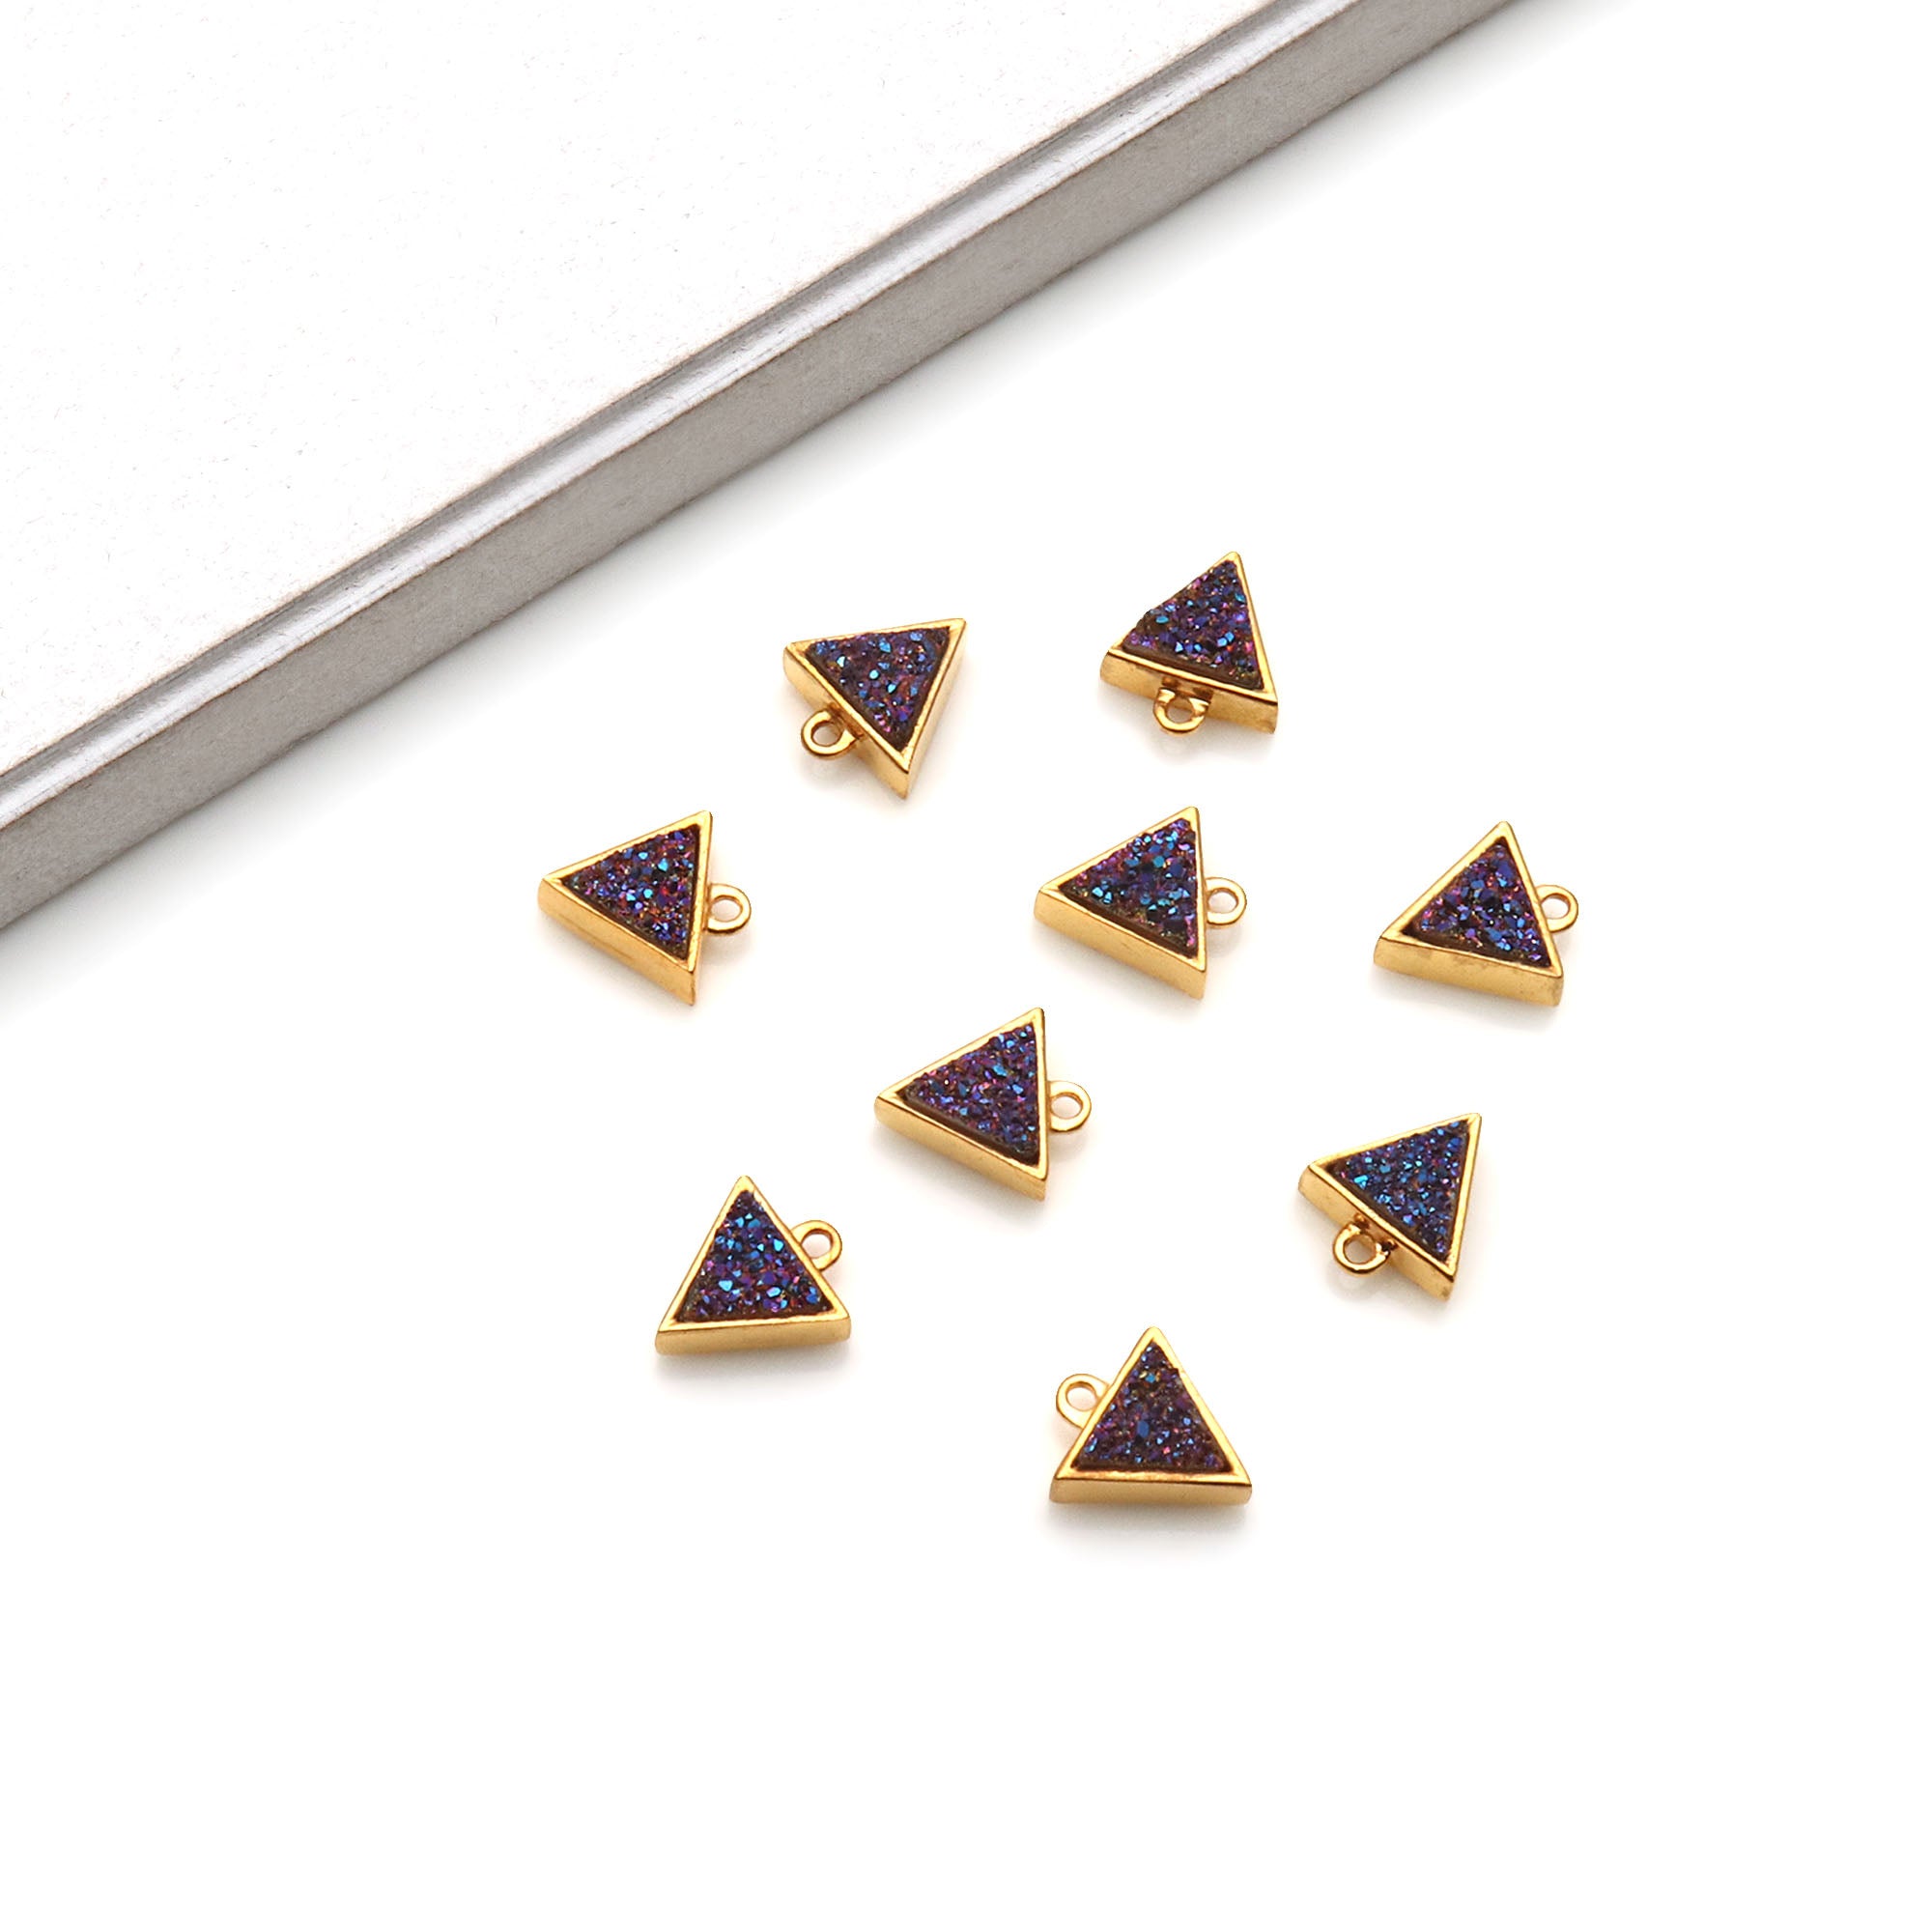 Purple Druzy Triangle 12x10mm Gold Plated Gemstone Connector - GemMartUSA